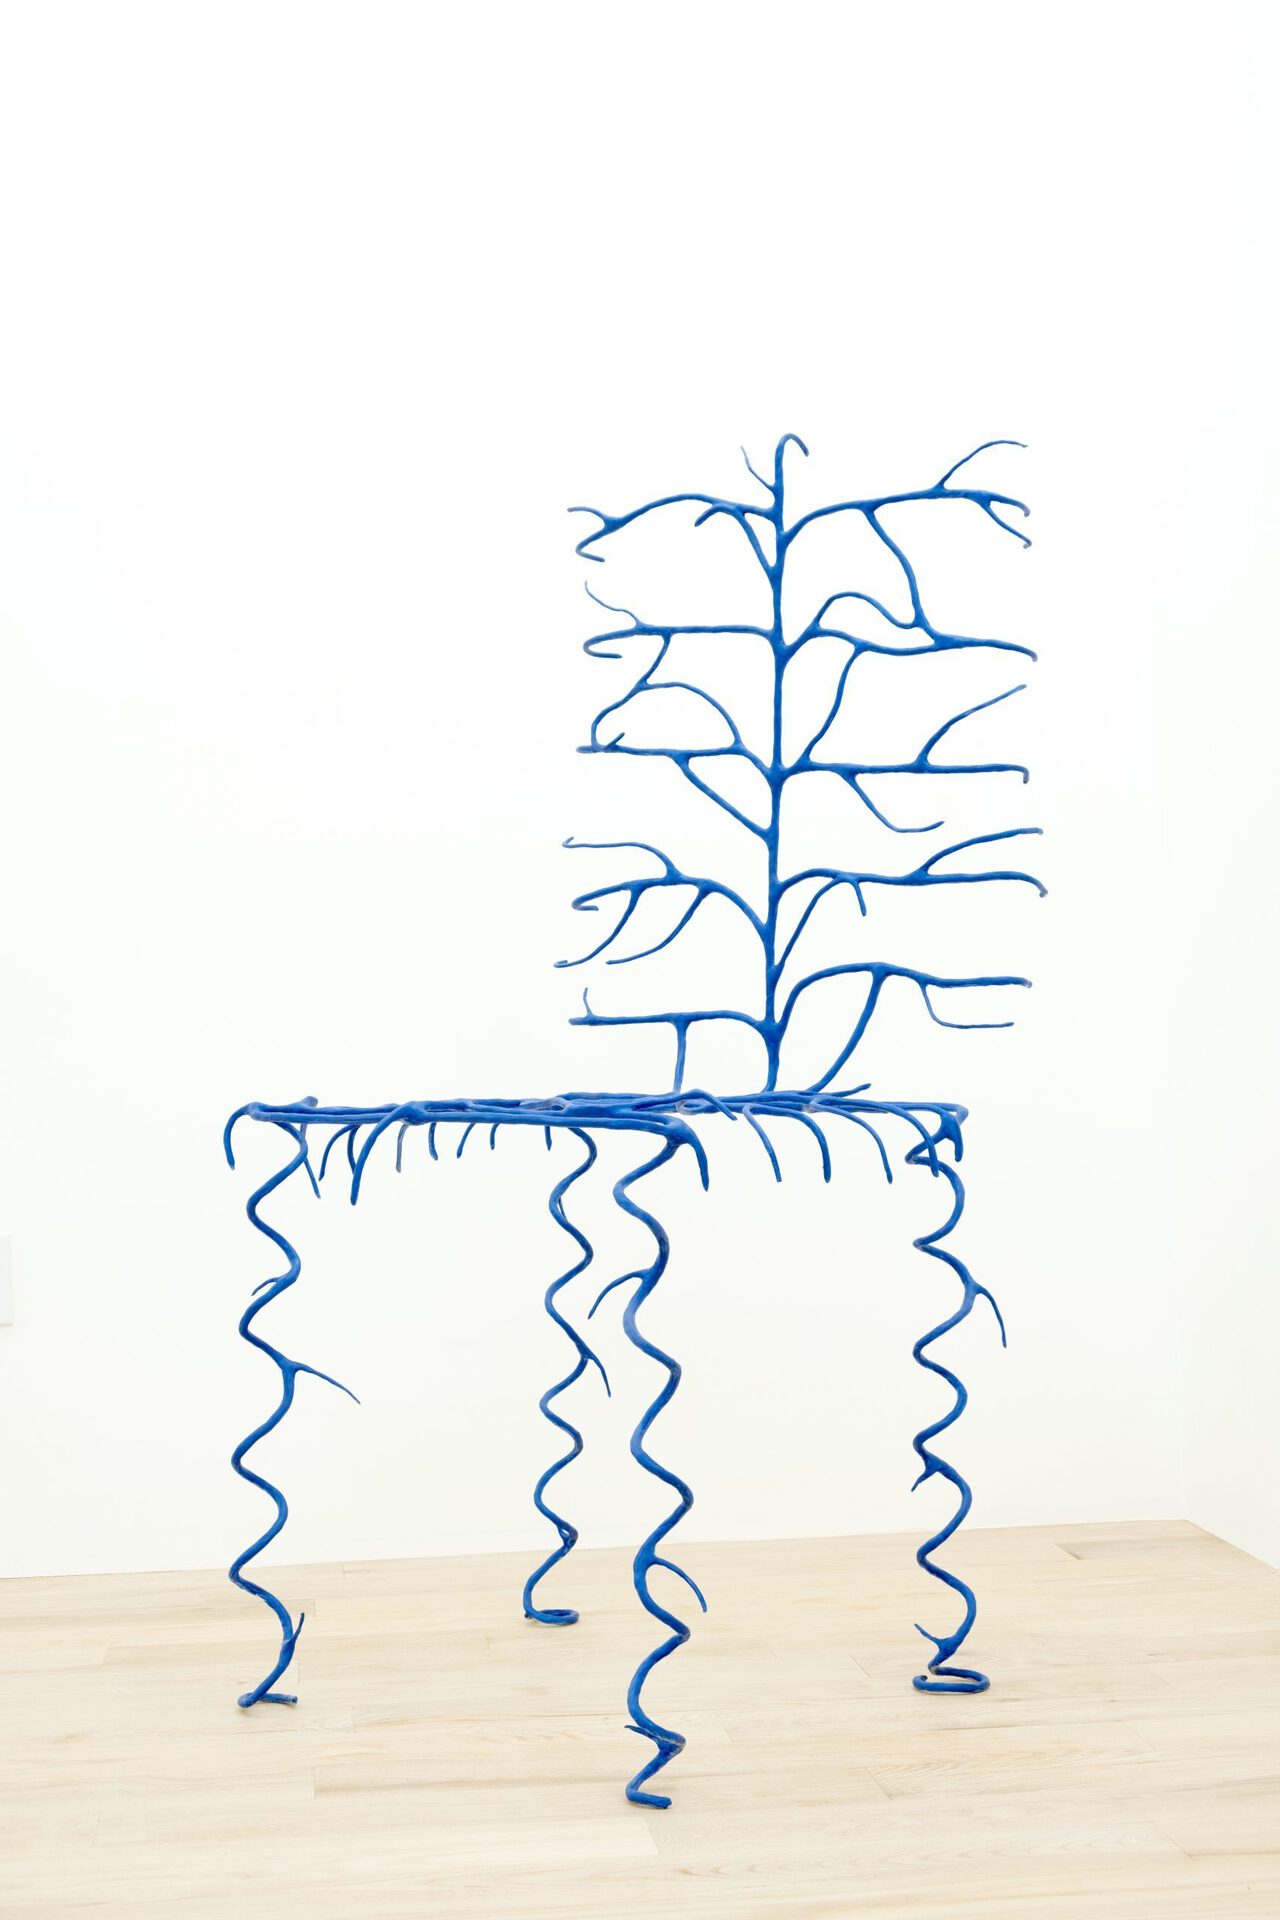 Kian McKeown, Blue Chair, 2021, armature wire, epoxy putty, paint, 51x21 11/16 x 20 1/2 in